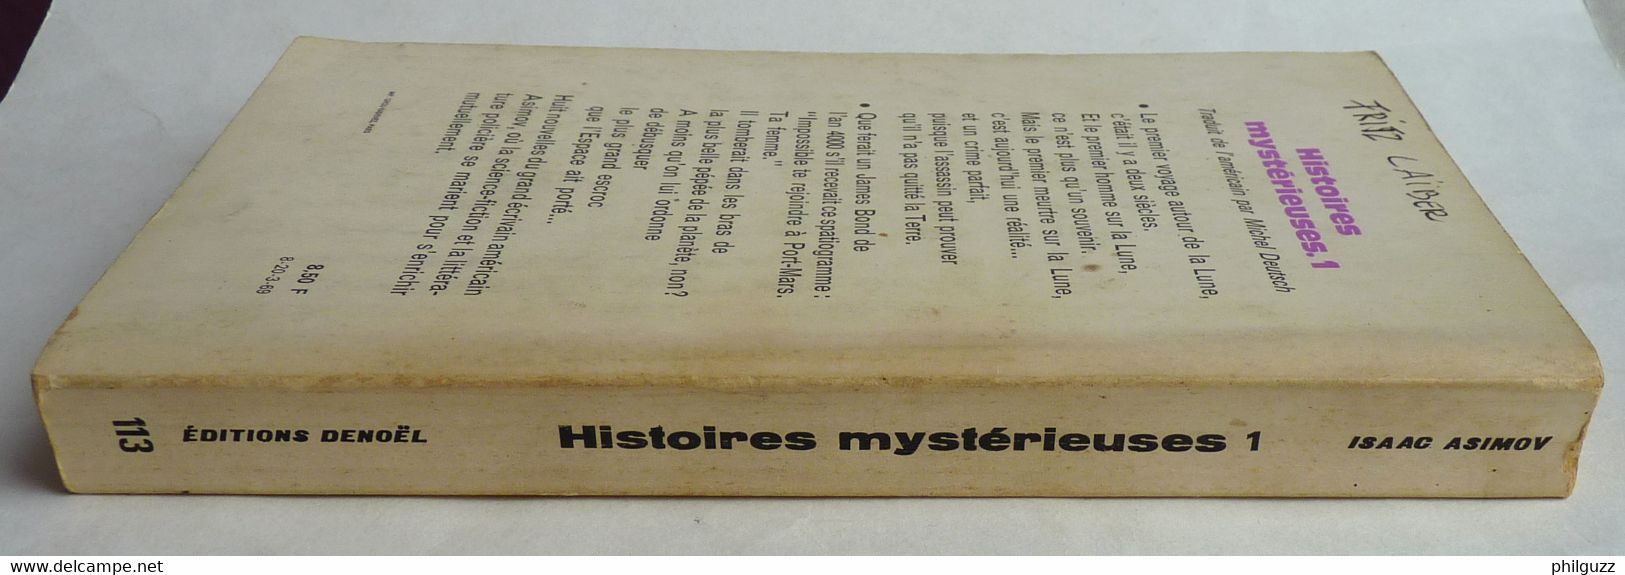 LIVRE SF DENOEL 113. HISTOIRES MYSTERIEUSES 1 Isaac ASIMOV 02-1969 - Présence Du Futur